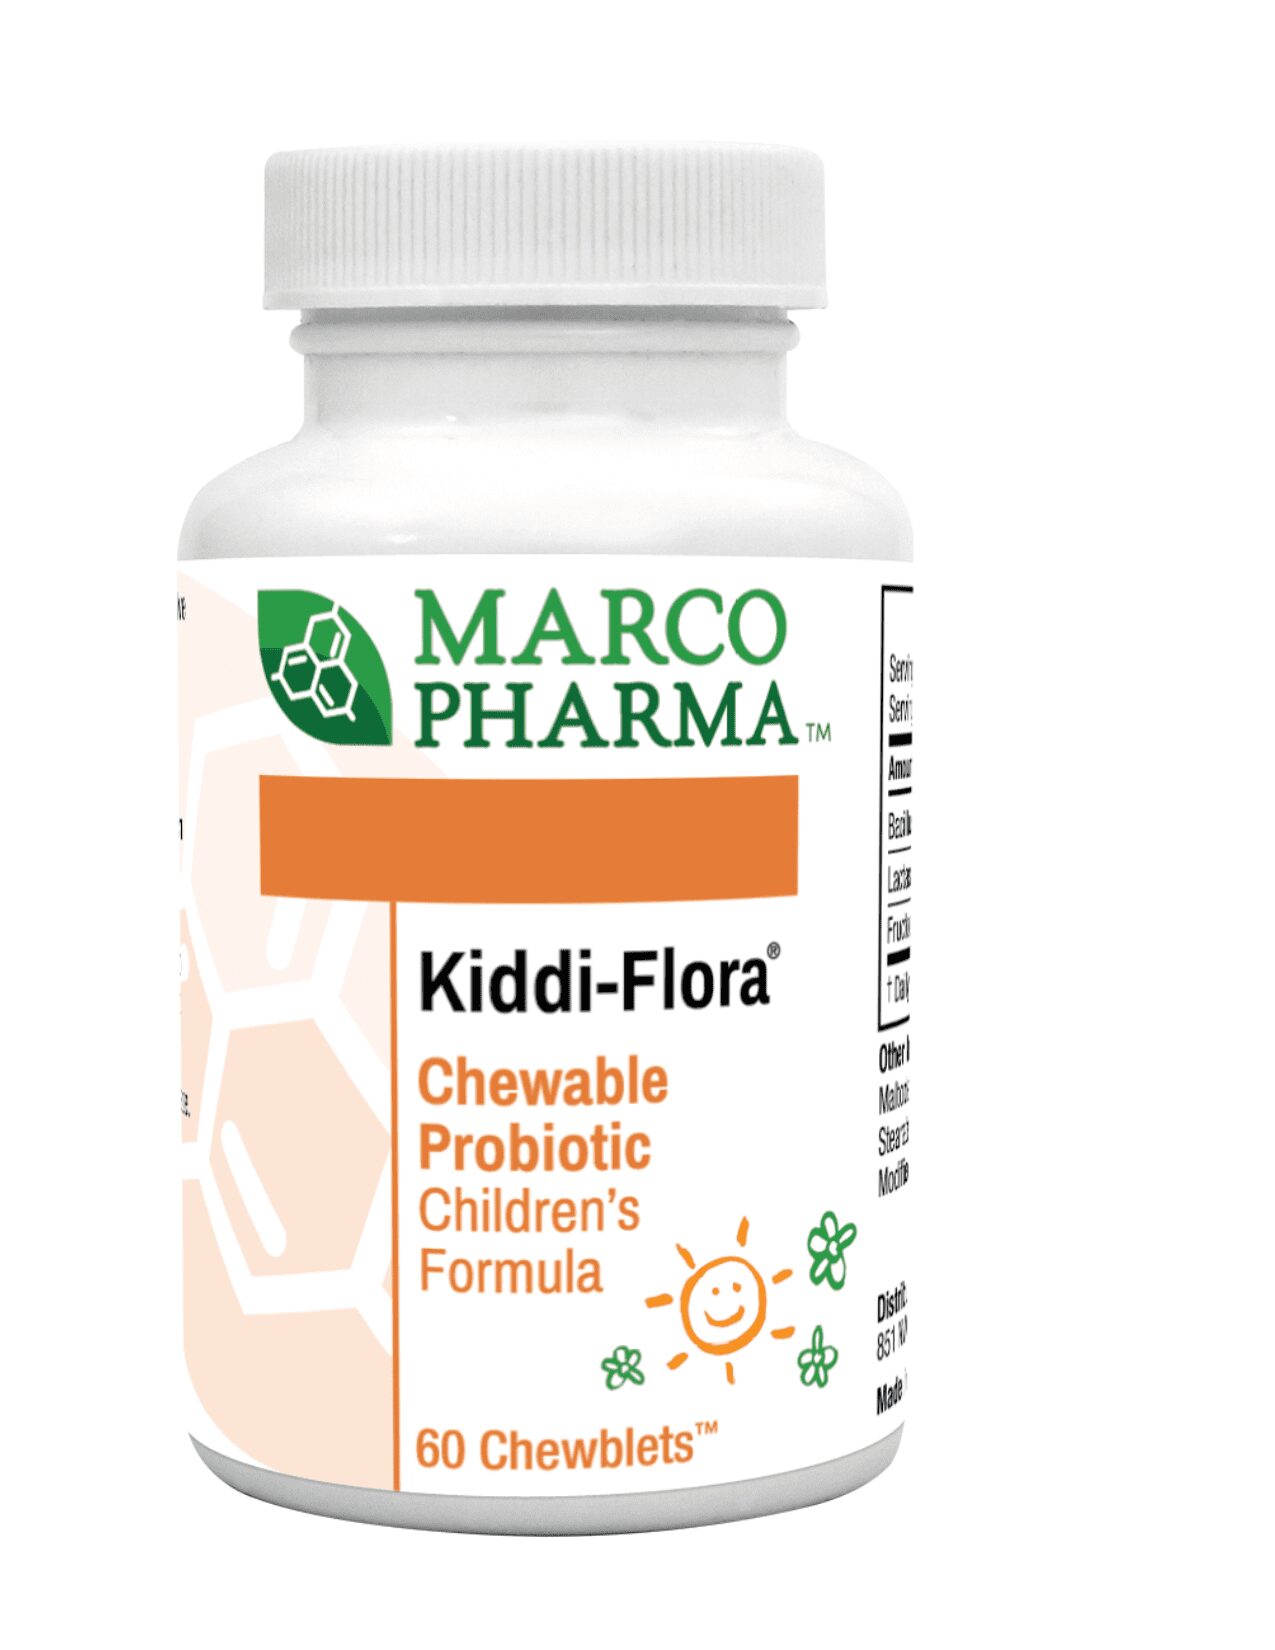 Kiddi-Flora™ Chewable tablets